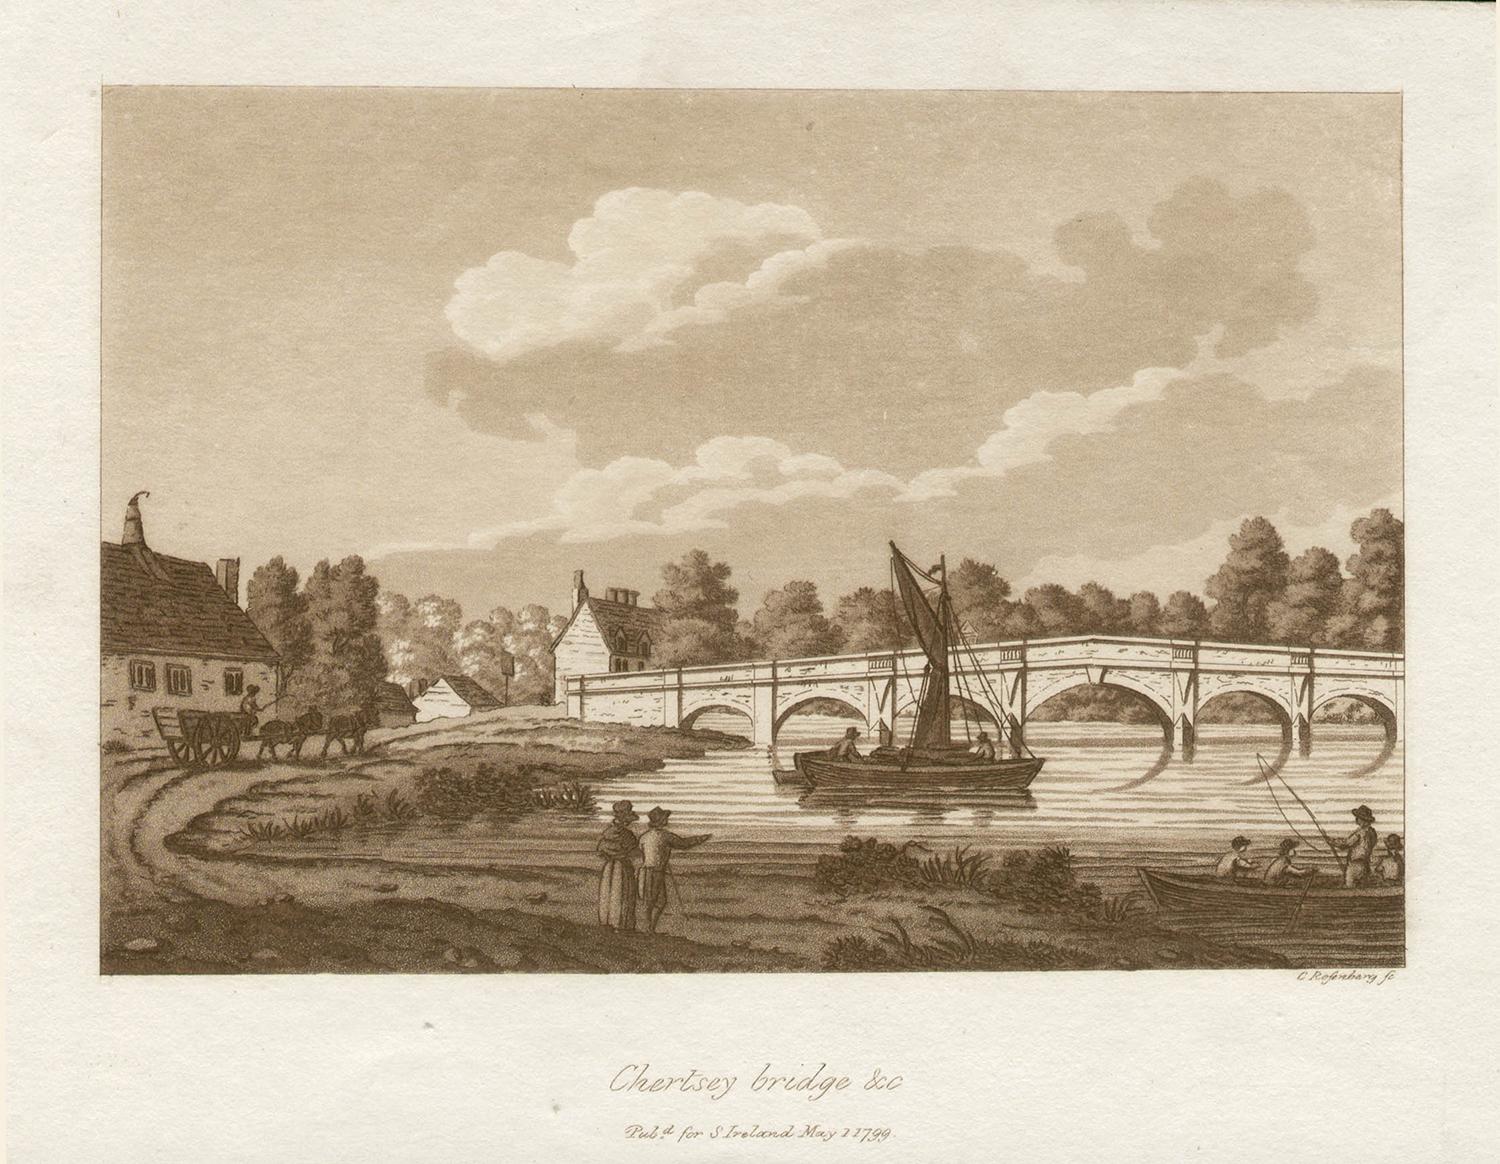 Samuel Ireland Landscape Print - Chertsey Bridge, Surrey, Thames, late 18th century English sepia aquatint, 1799